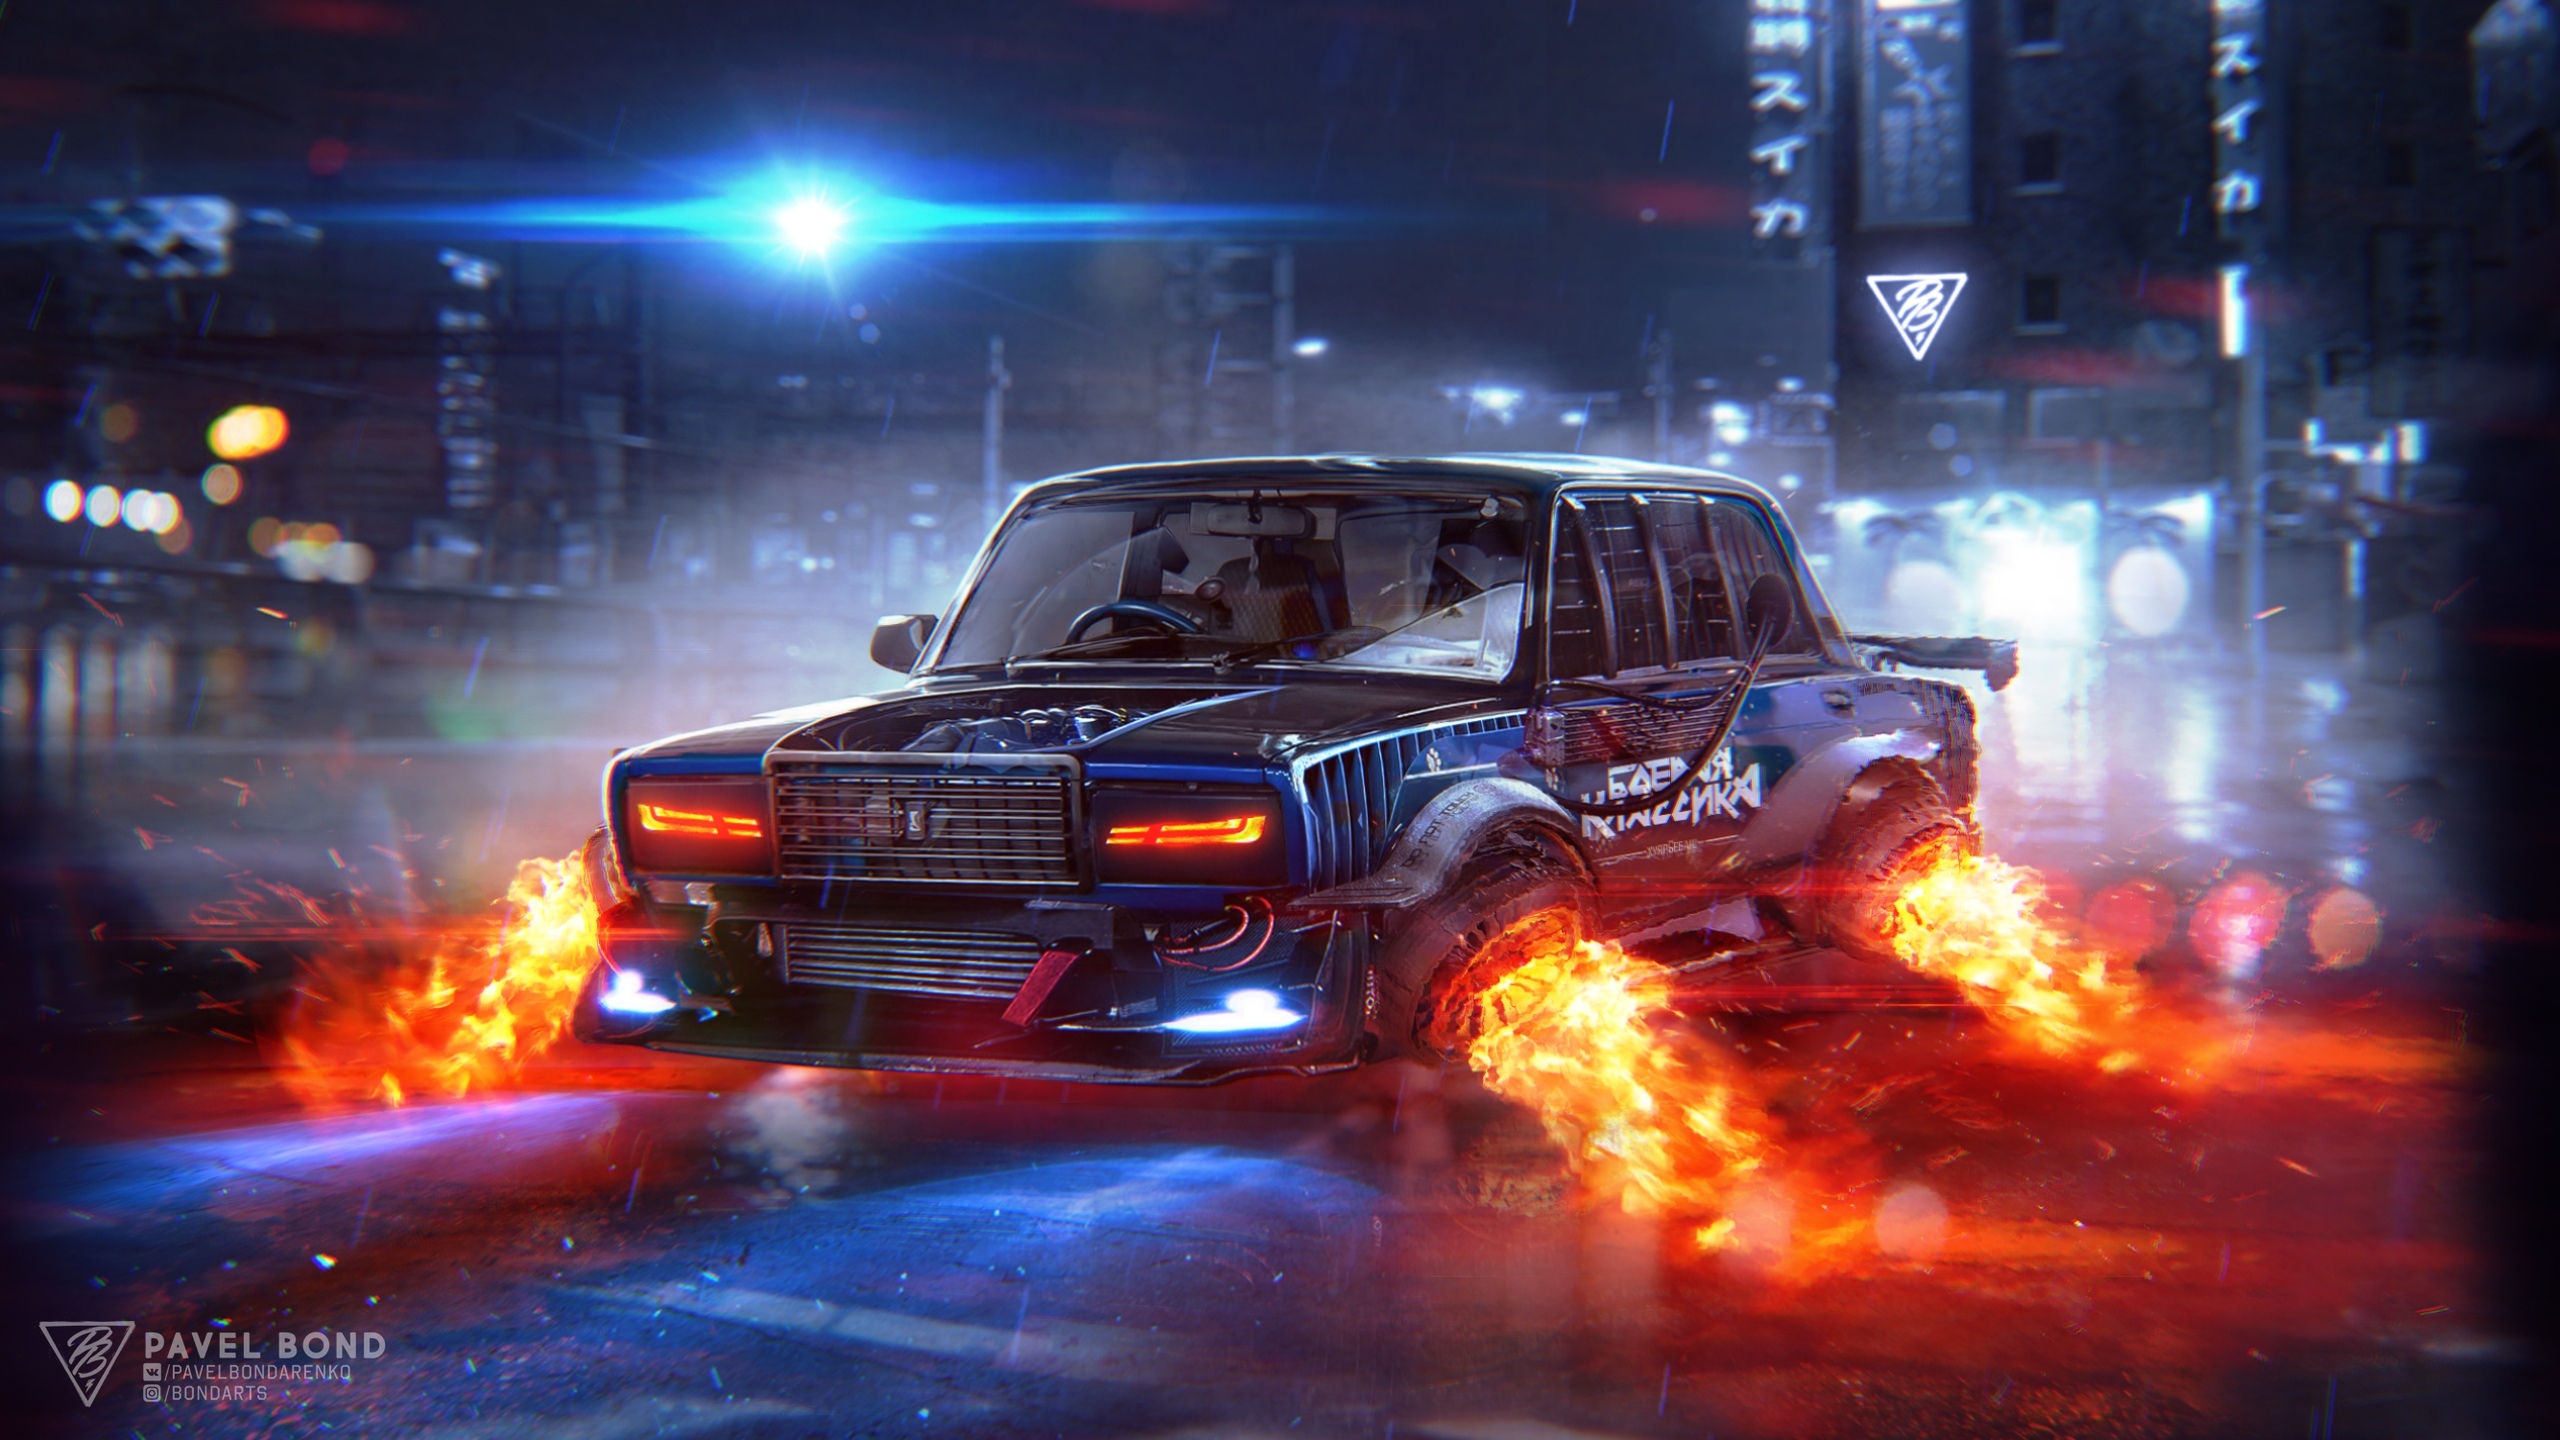 Digital Art Photoshop Artwork Car Futuristic Cyberpunk Fire Depth Of Field City Lights Pavel Bondare 2560x1440